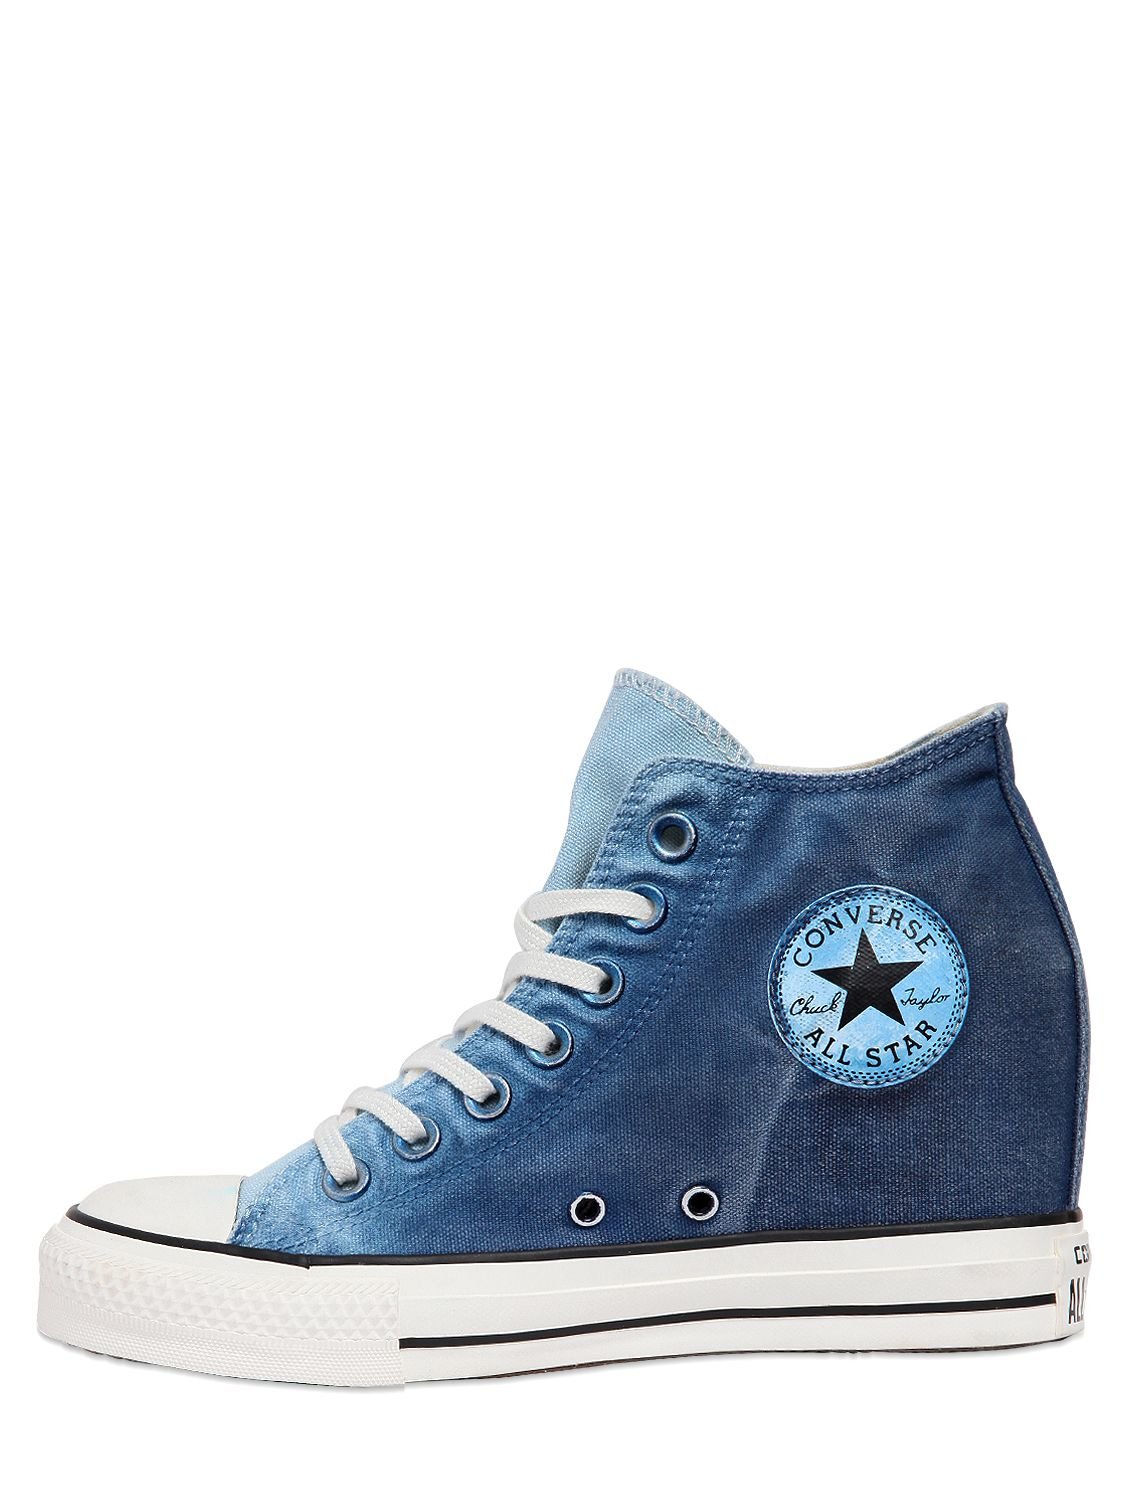 Converse 80mm Star Mid Lux Denim Wedge Sneakers in Blue - Lyst